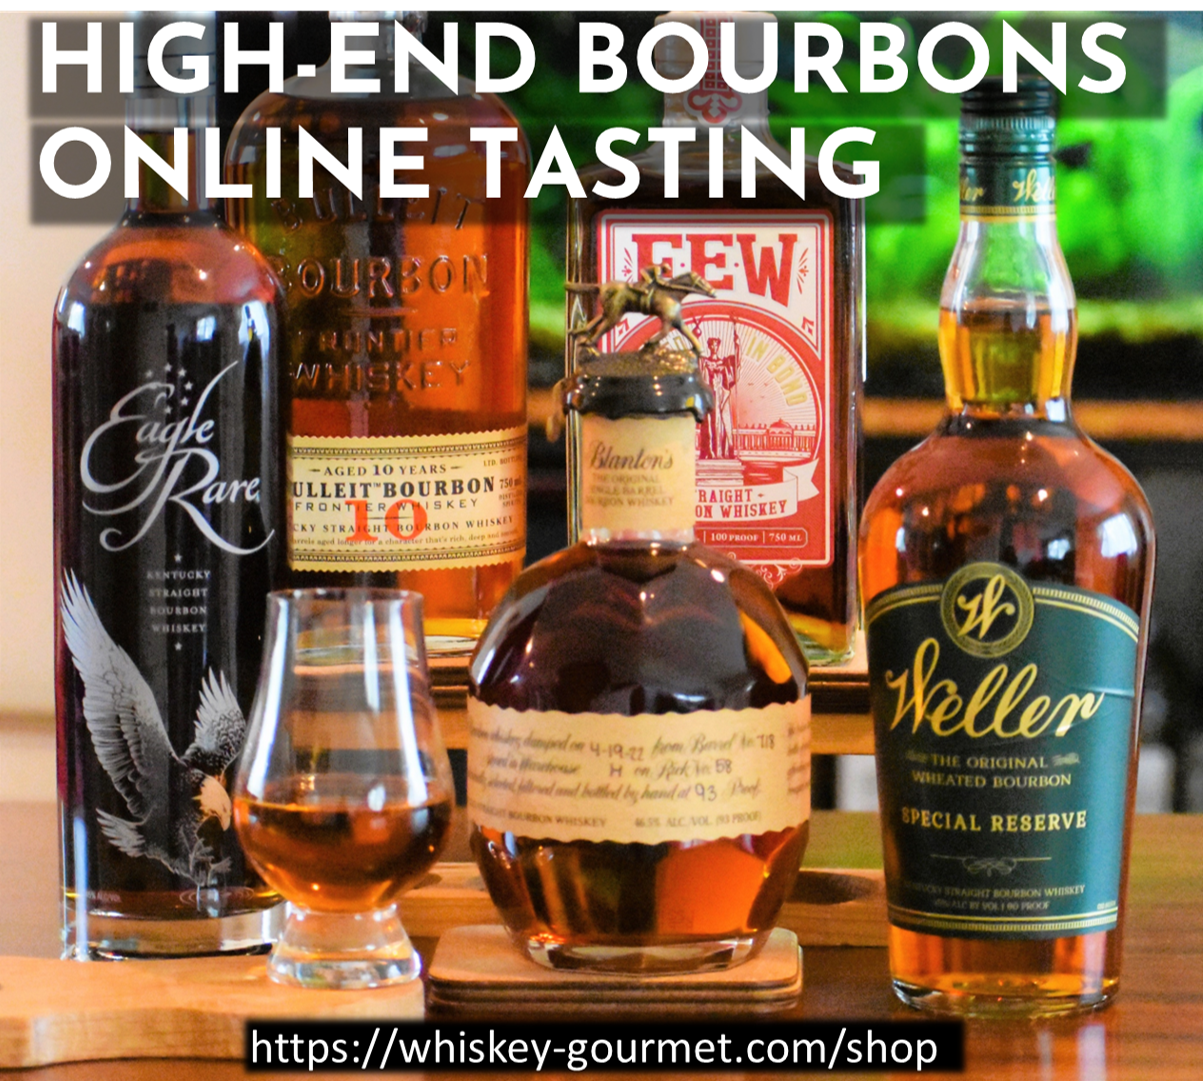 Bourbon high-end online tasting - includes Blanton's single barrel